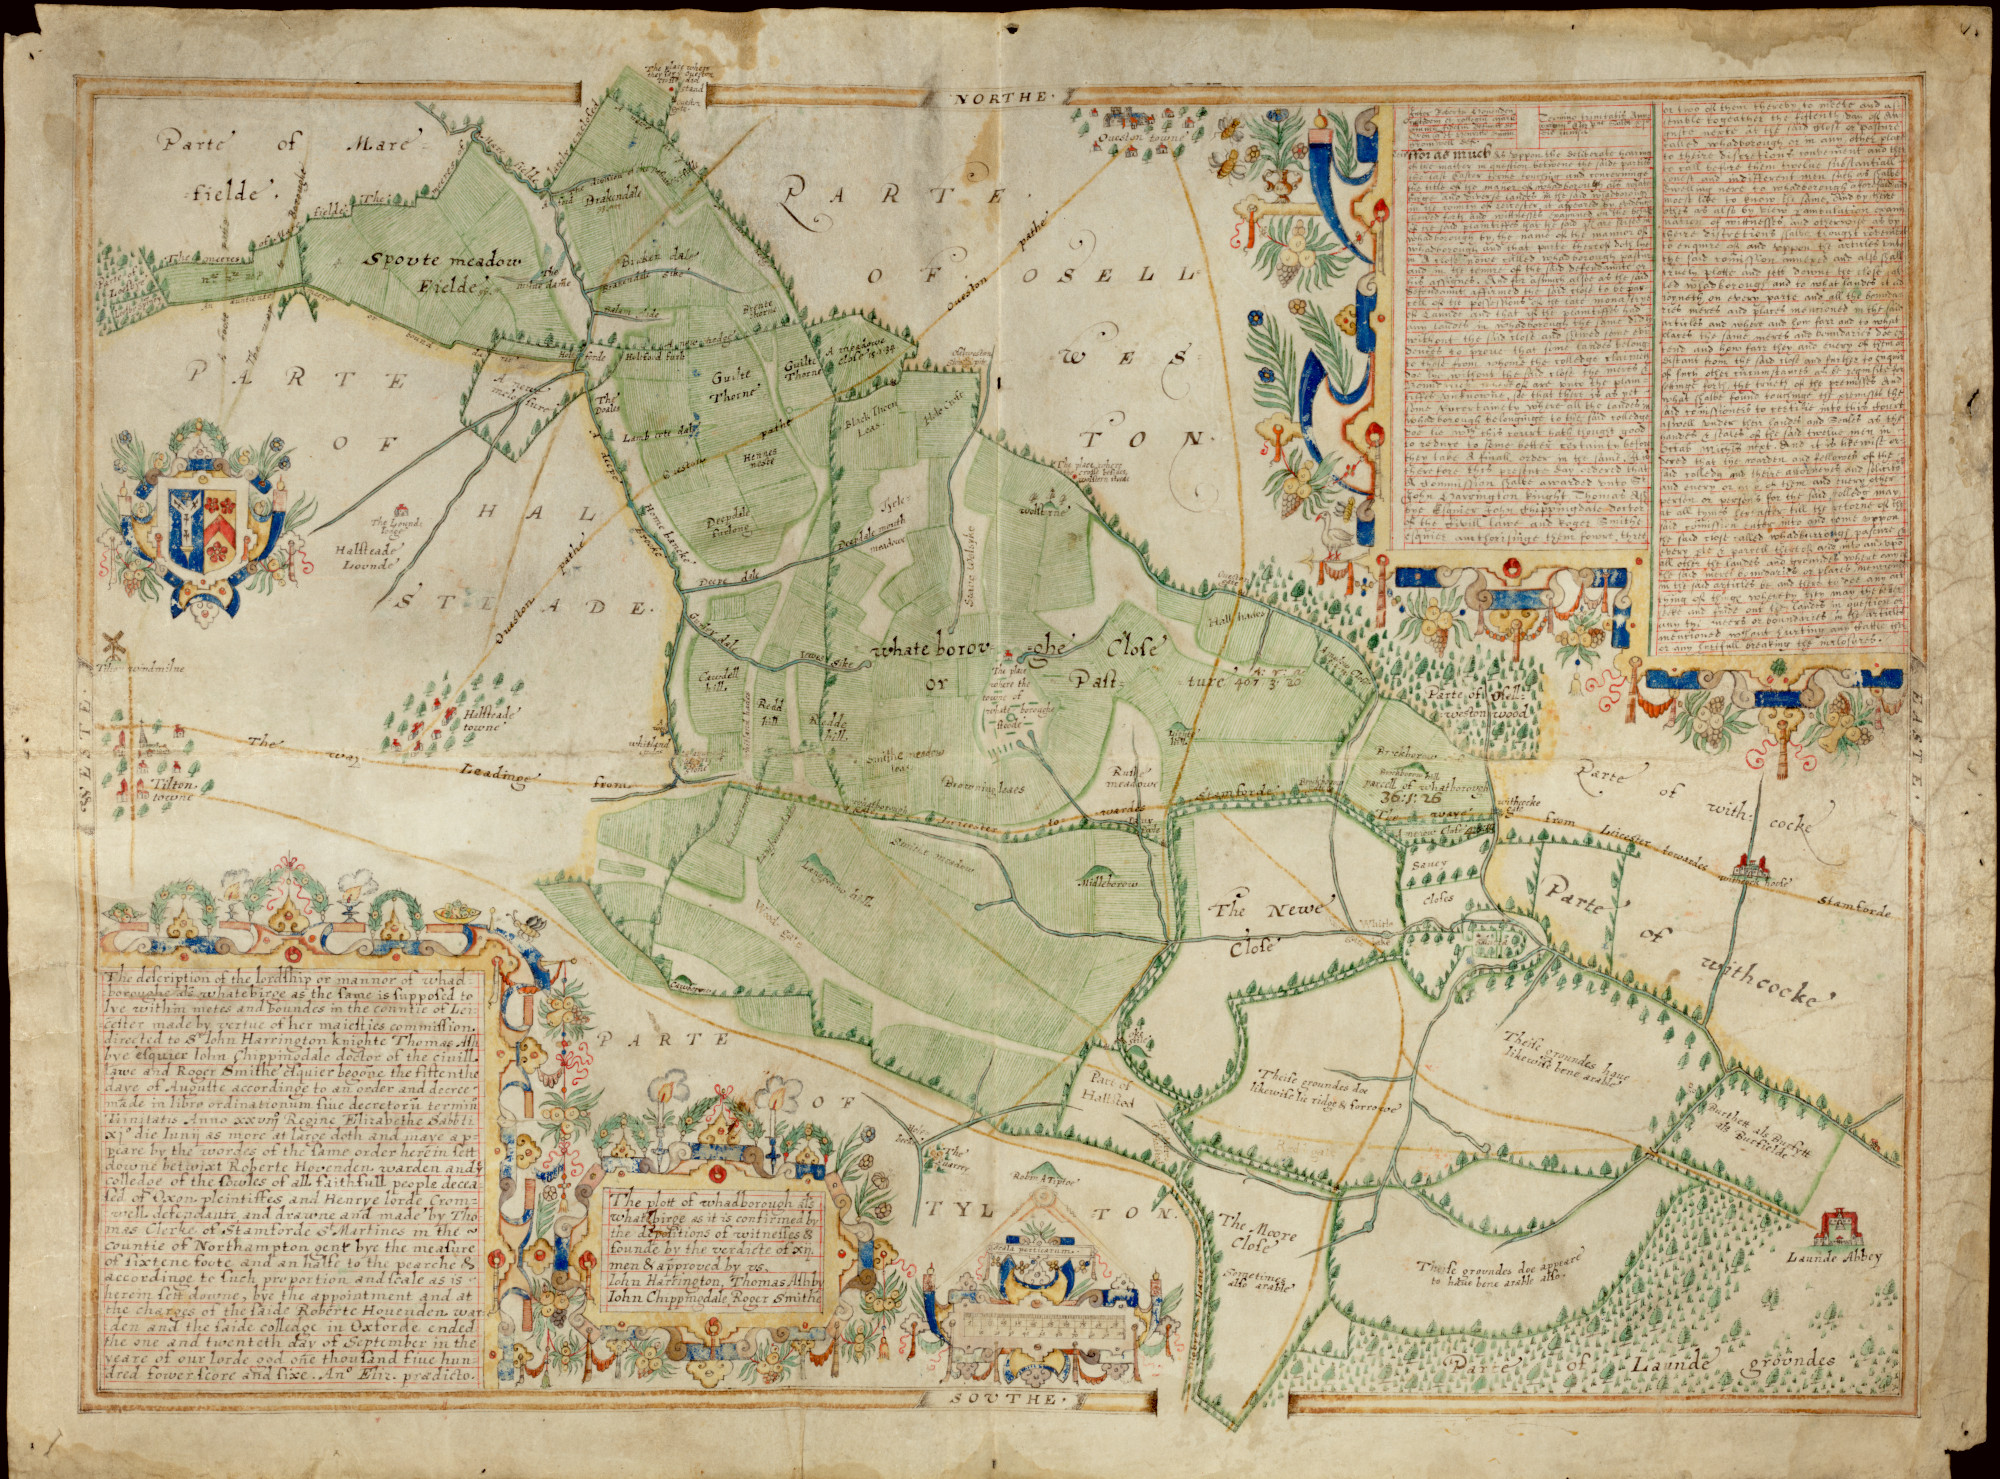 Hovenden Map I.19, map of Wadborough